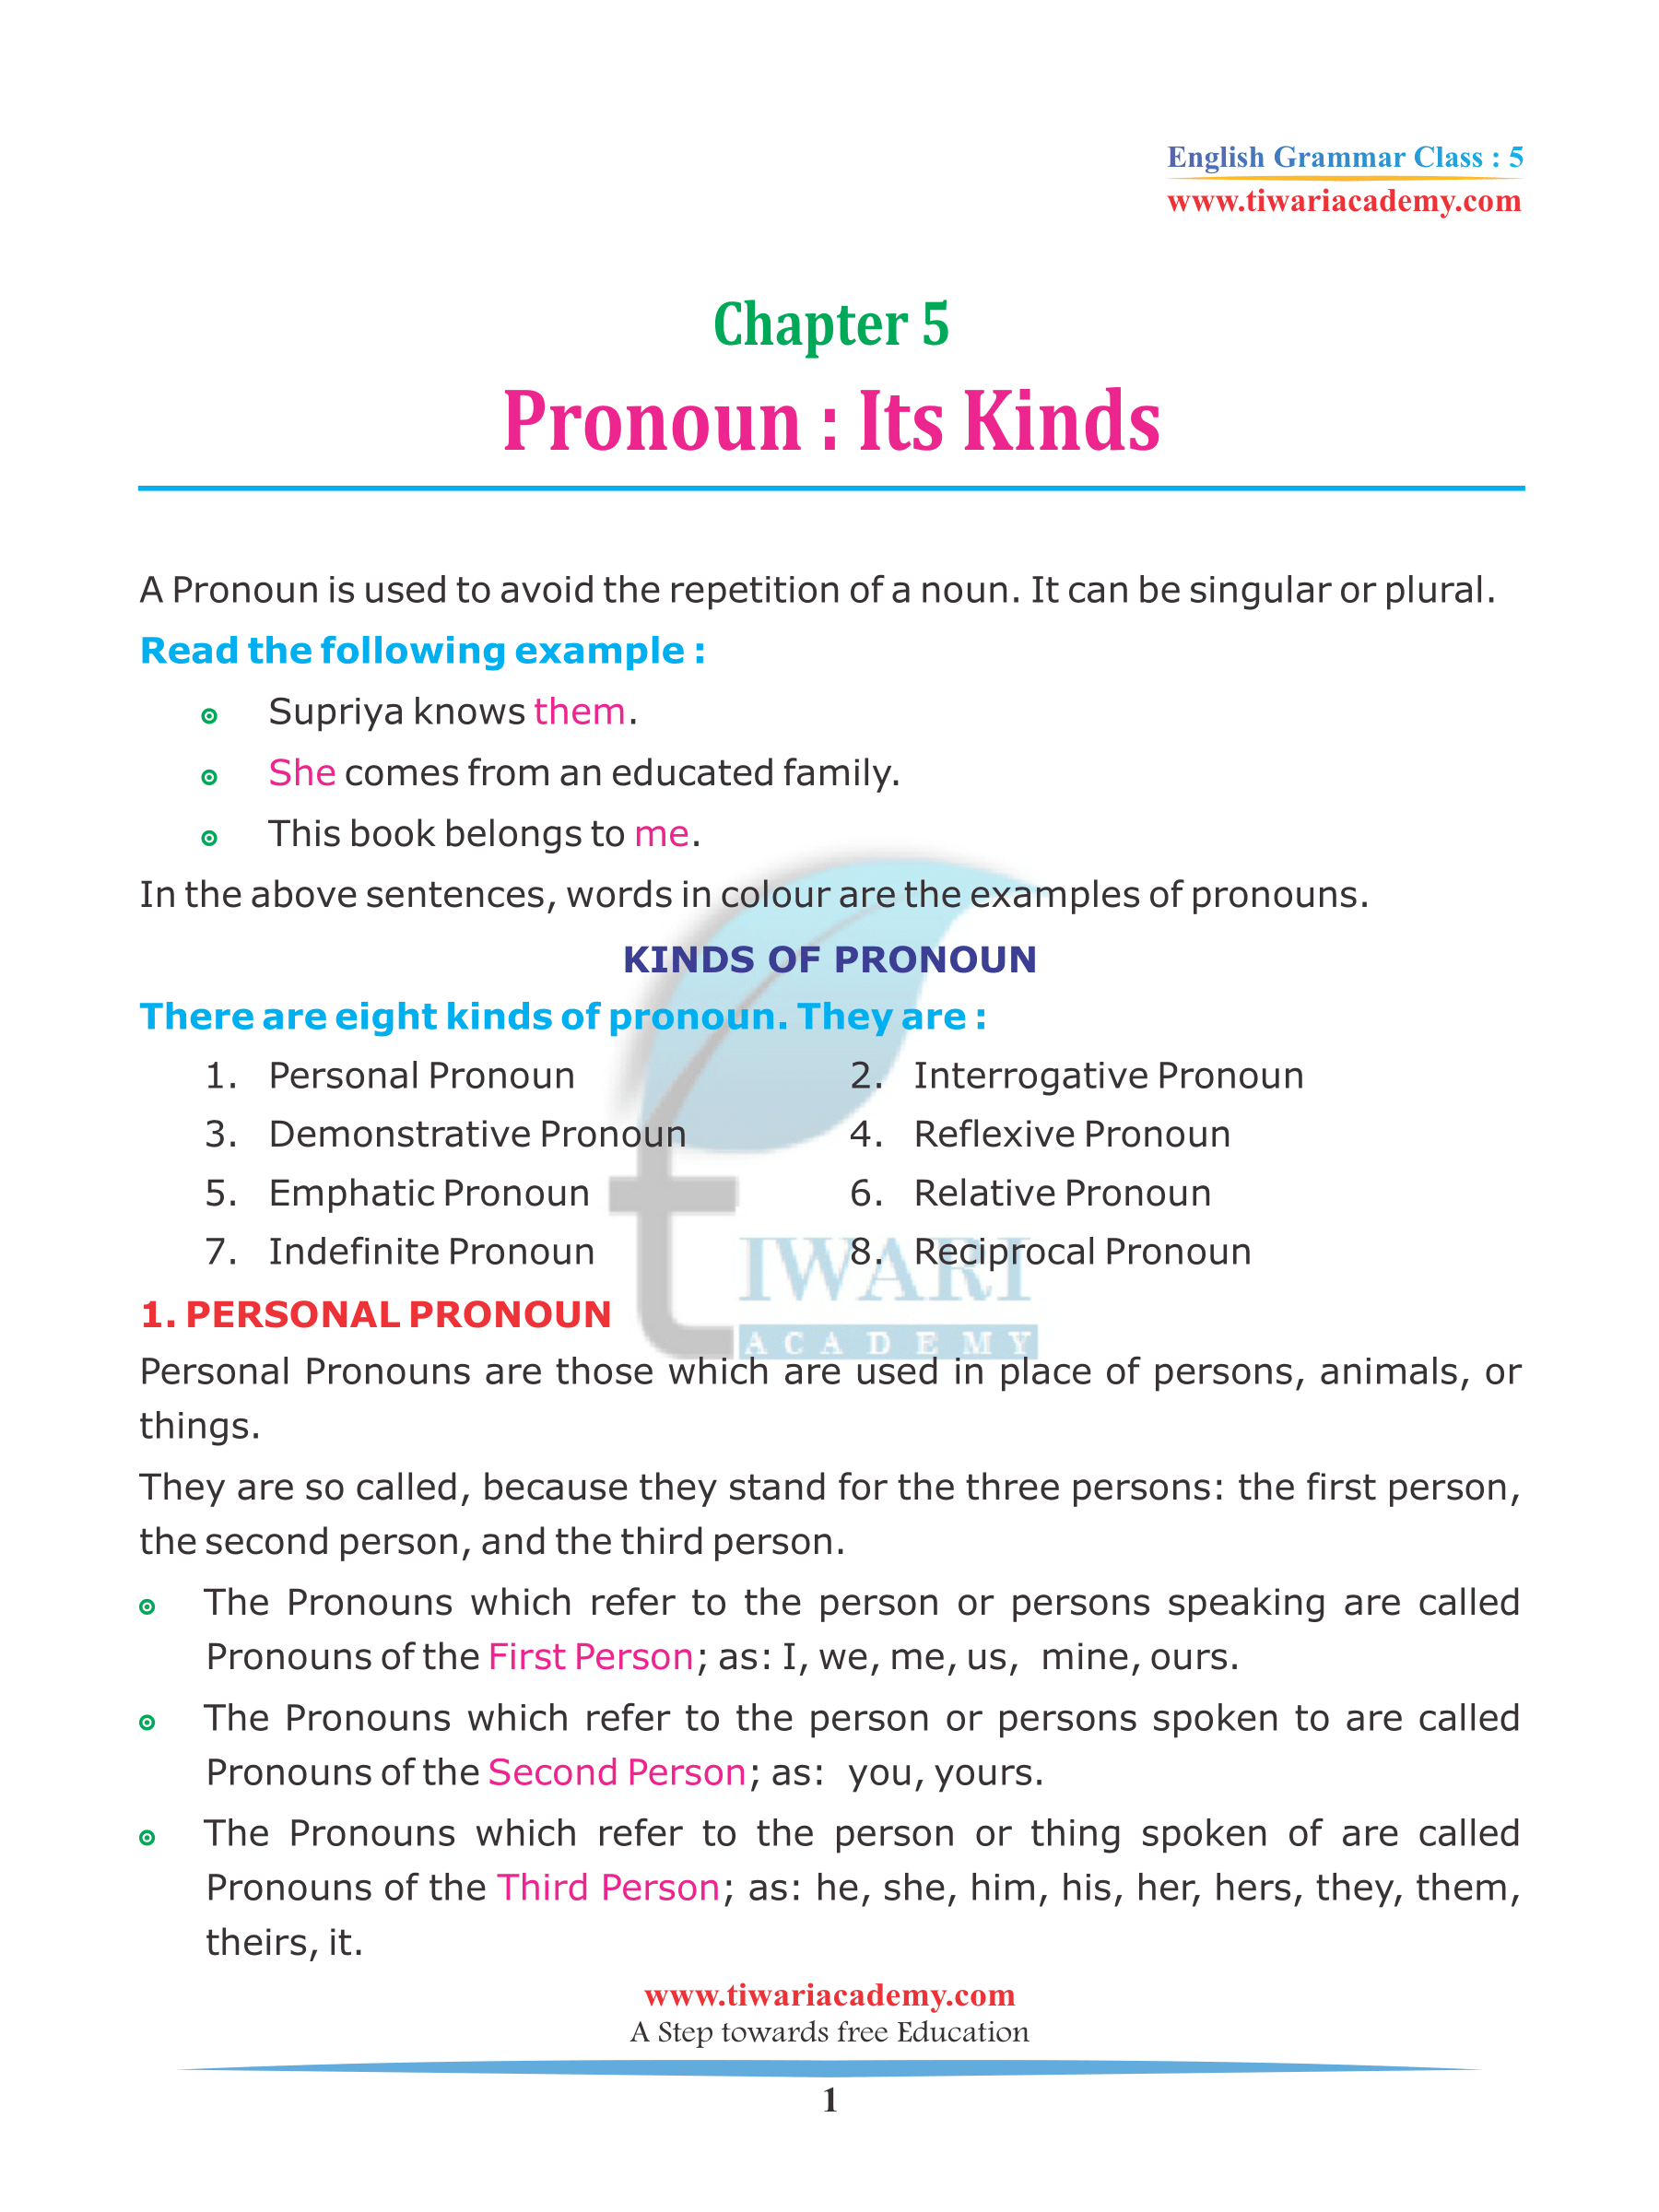 NCERT Solutions for Class 5 English Grammar Chapter 5 Pronoun its kinds